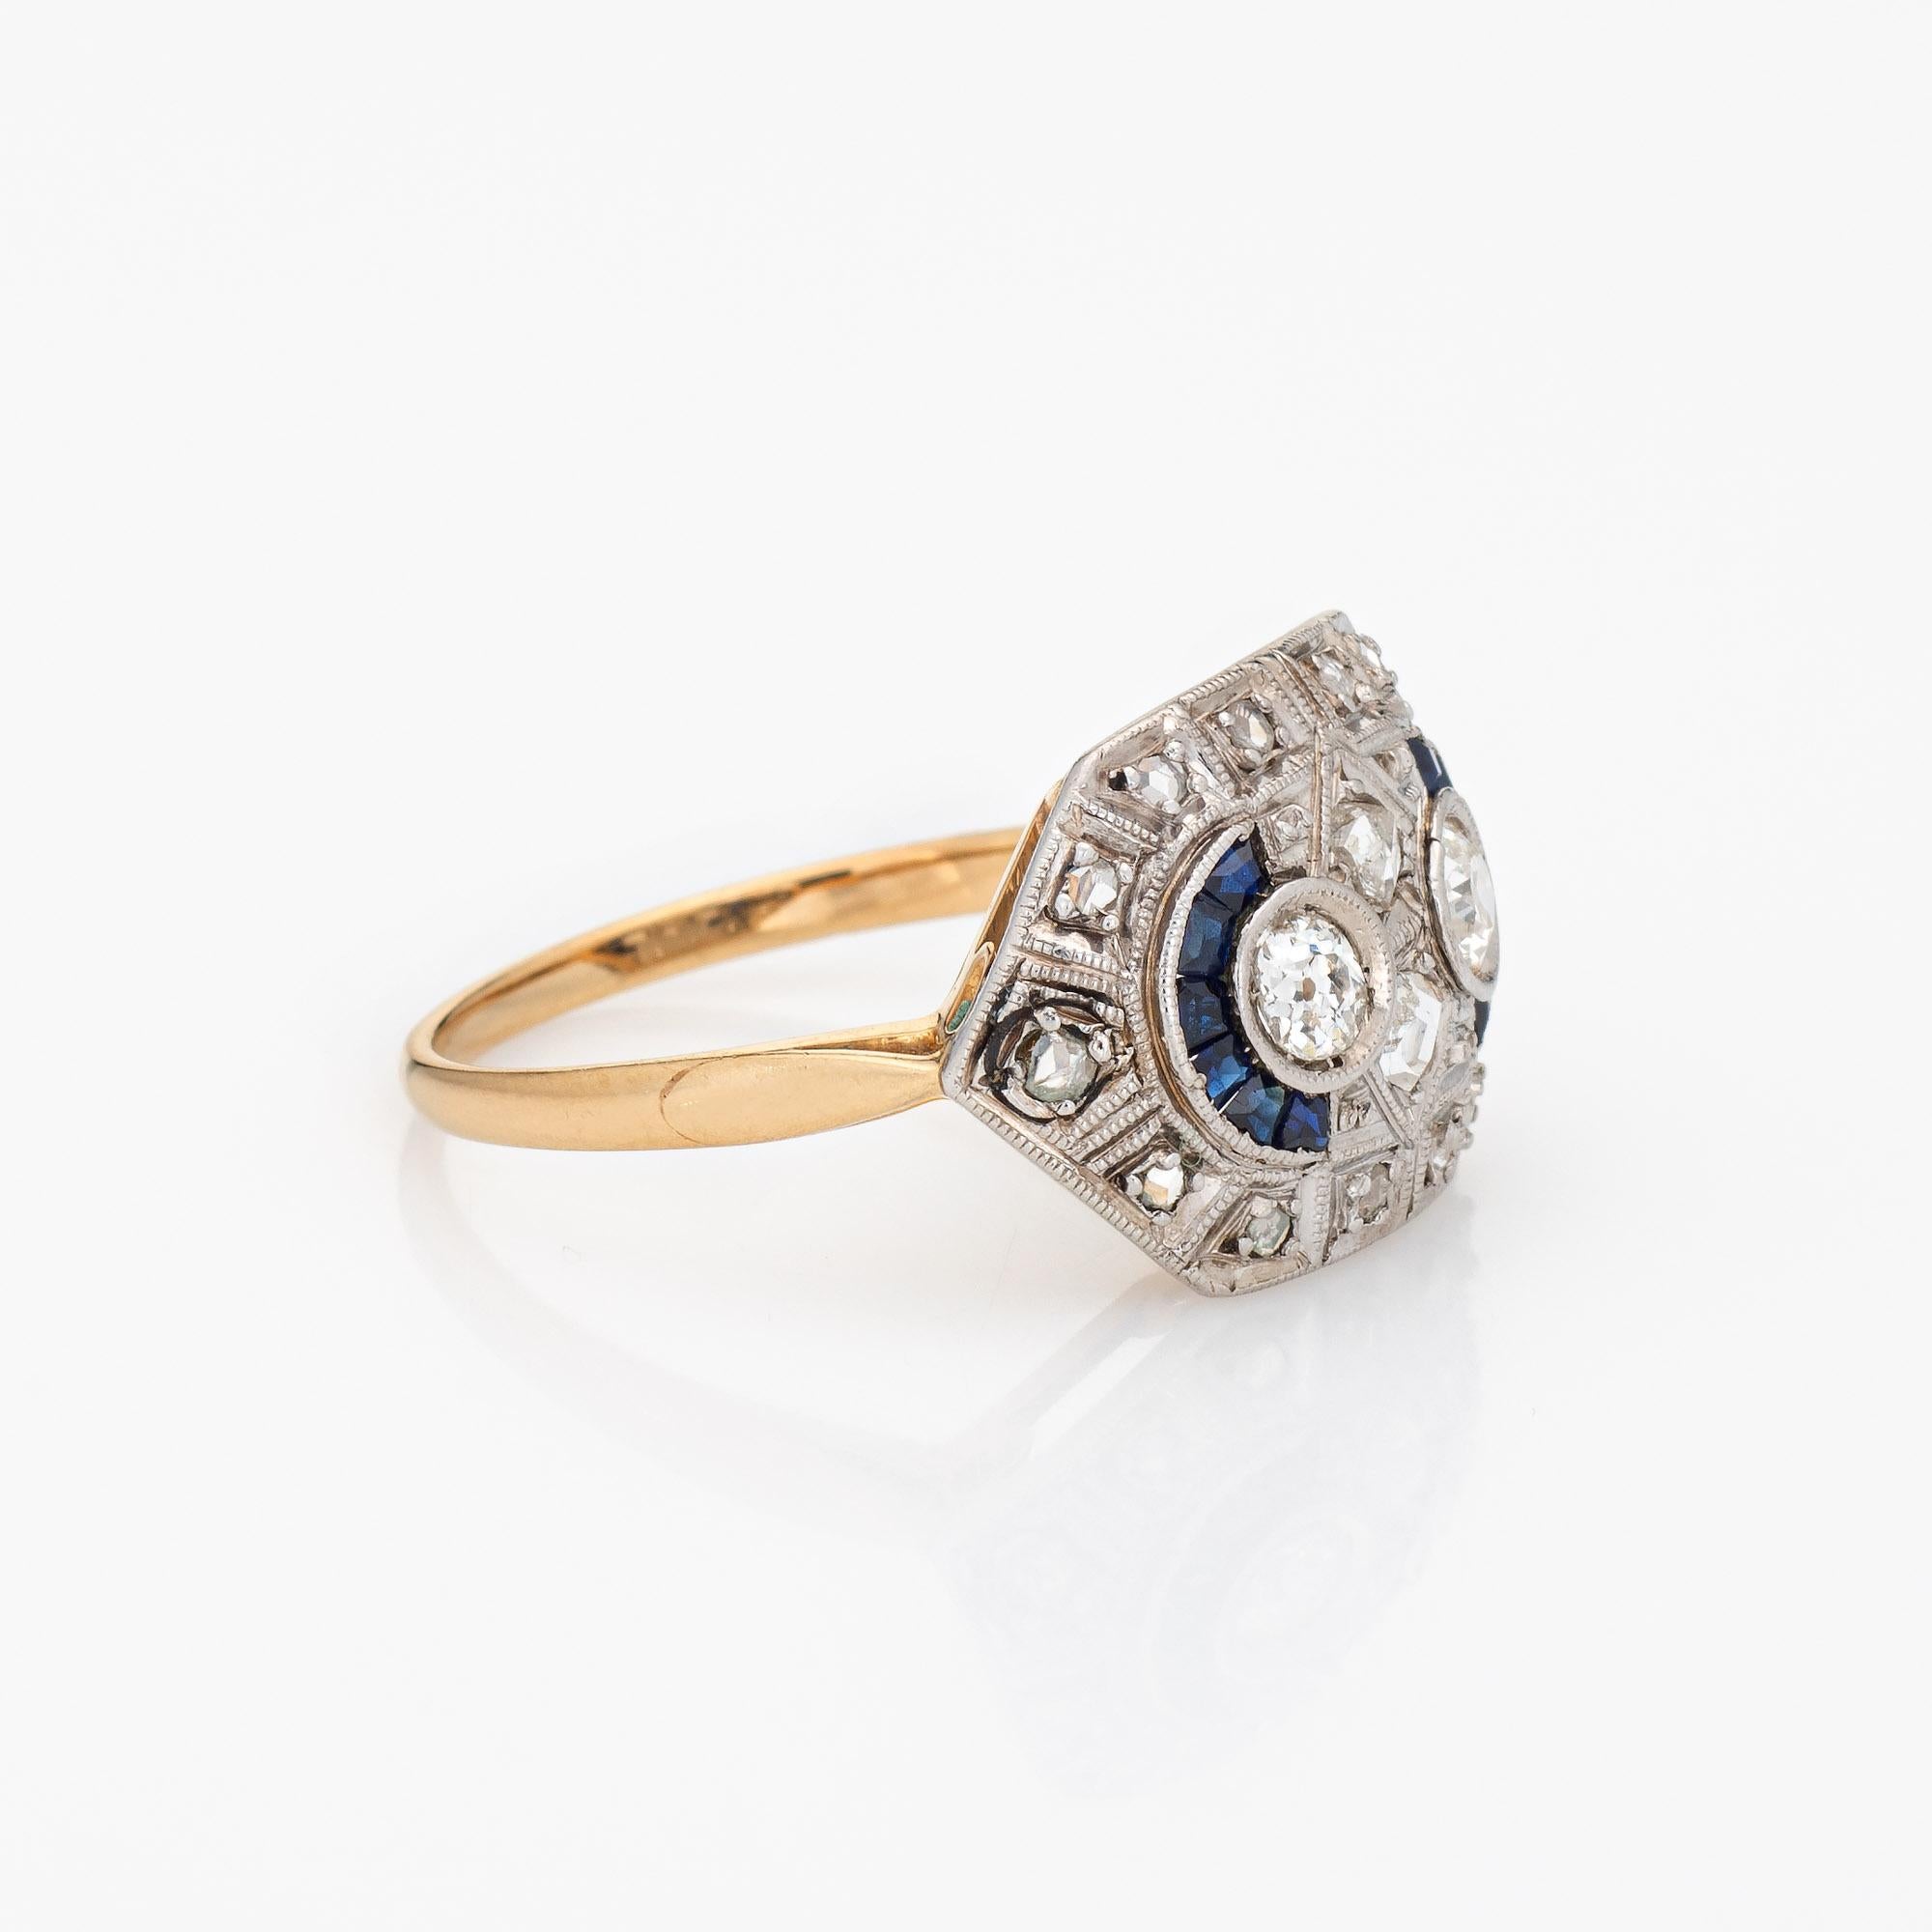 Old Mine Cut Vintage Art Deco Diamond Sapphire Ring 18k Gold Platinum Estate Jewelry Sz 6.75